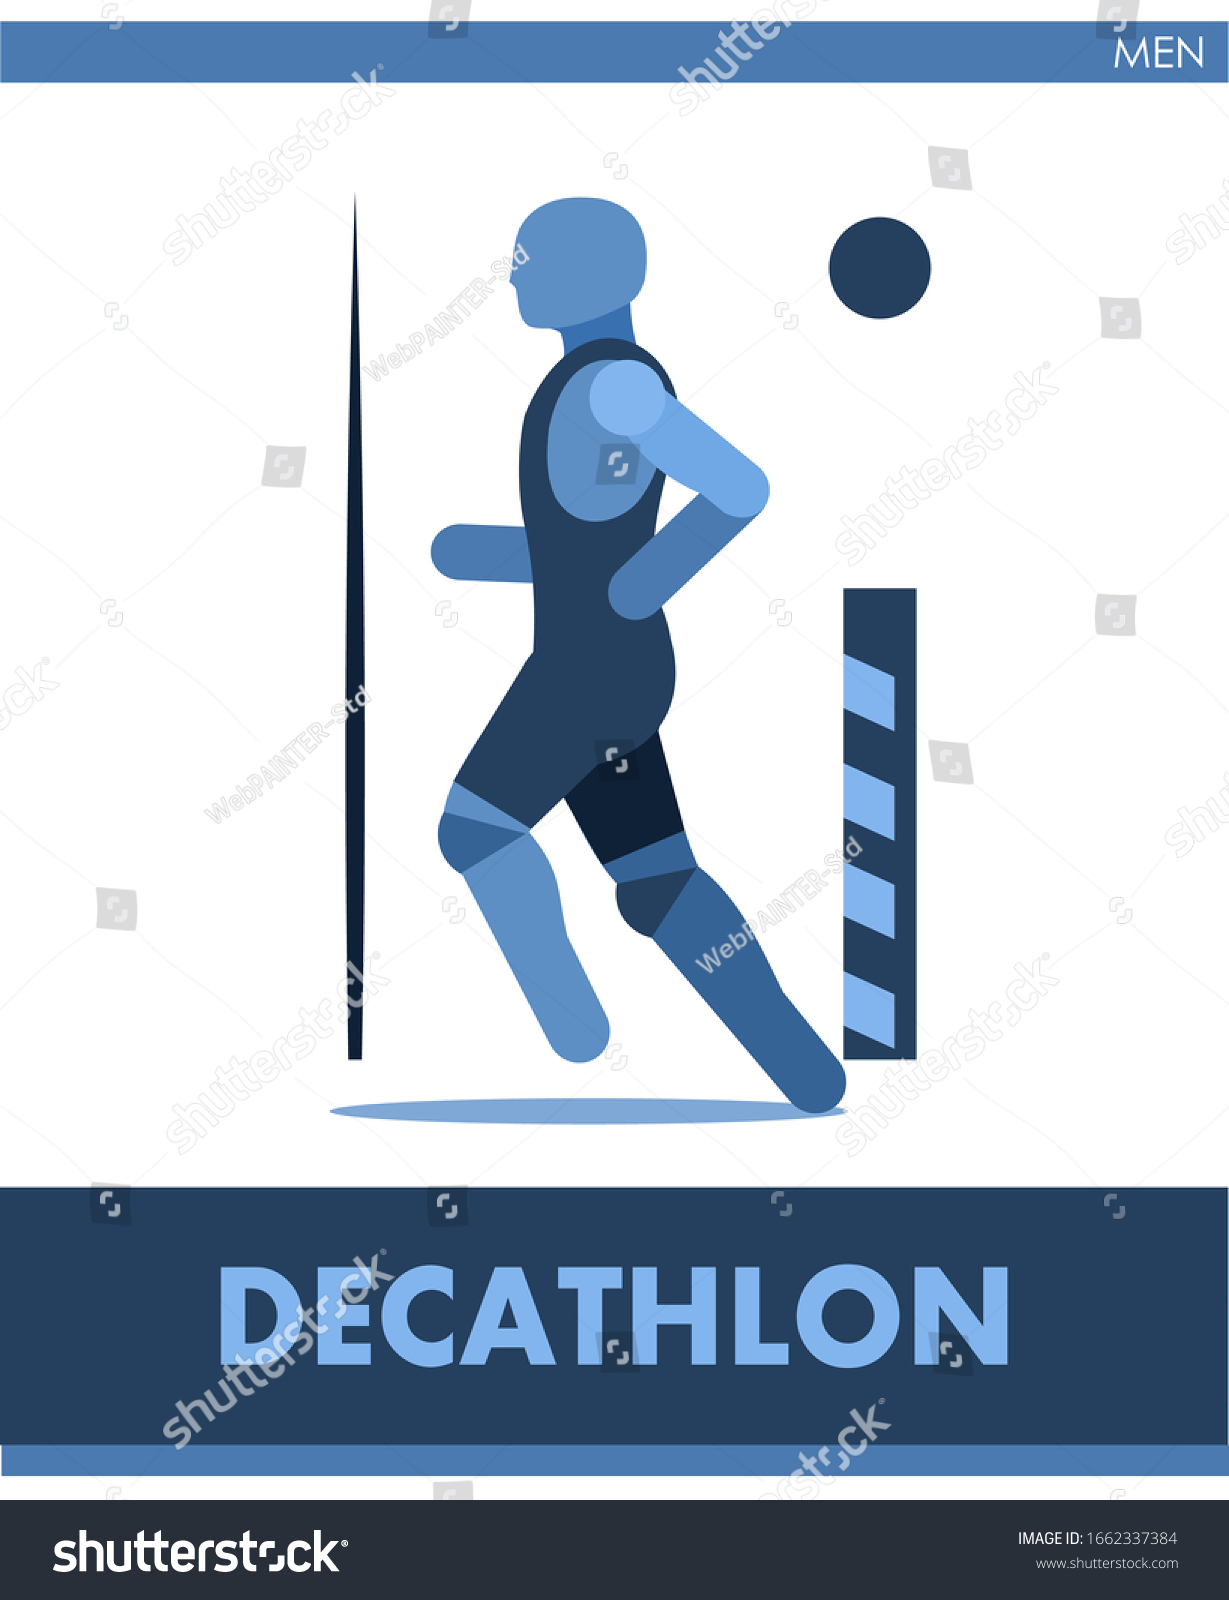 Decathlon events